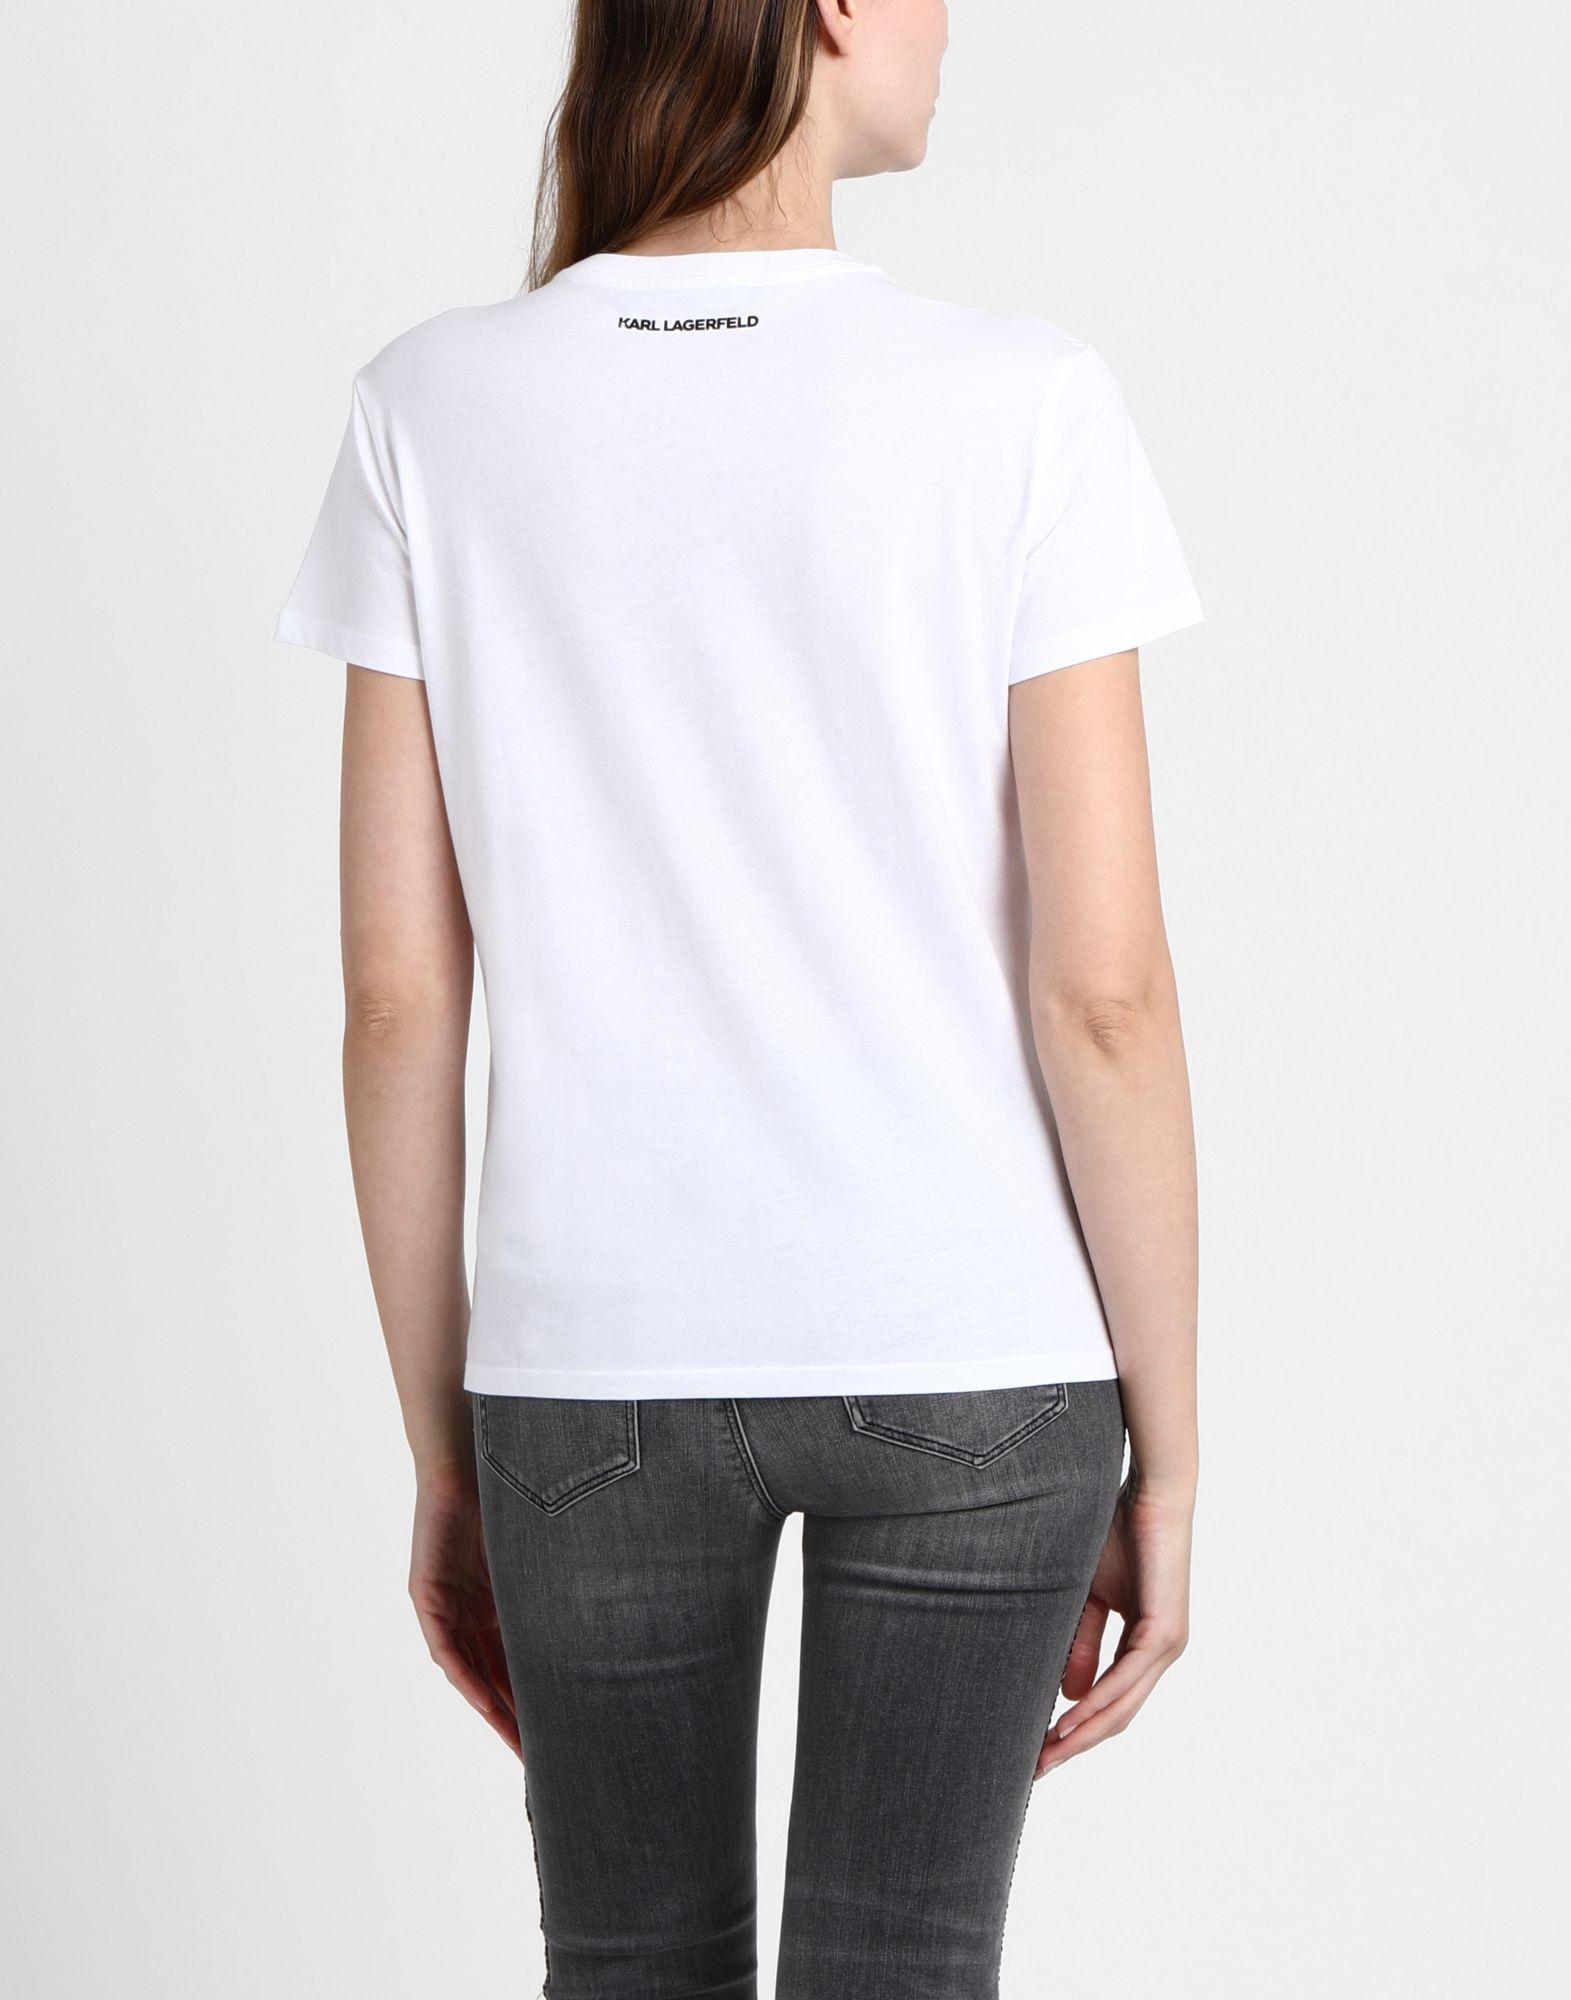 Karl Lagerfeld T-shirt in White - Lyst